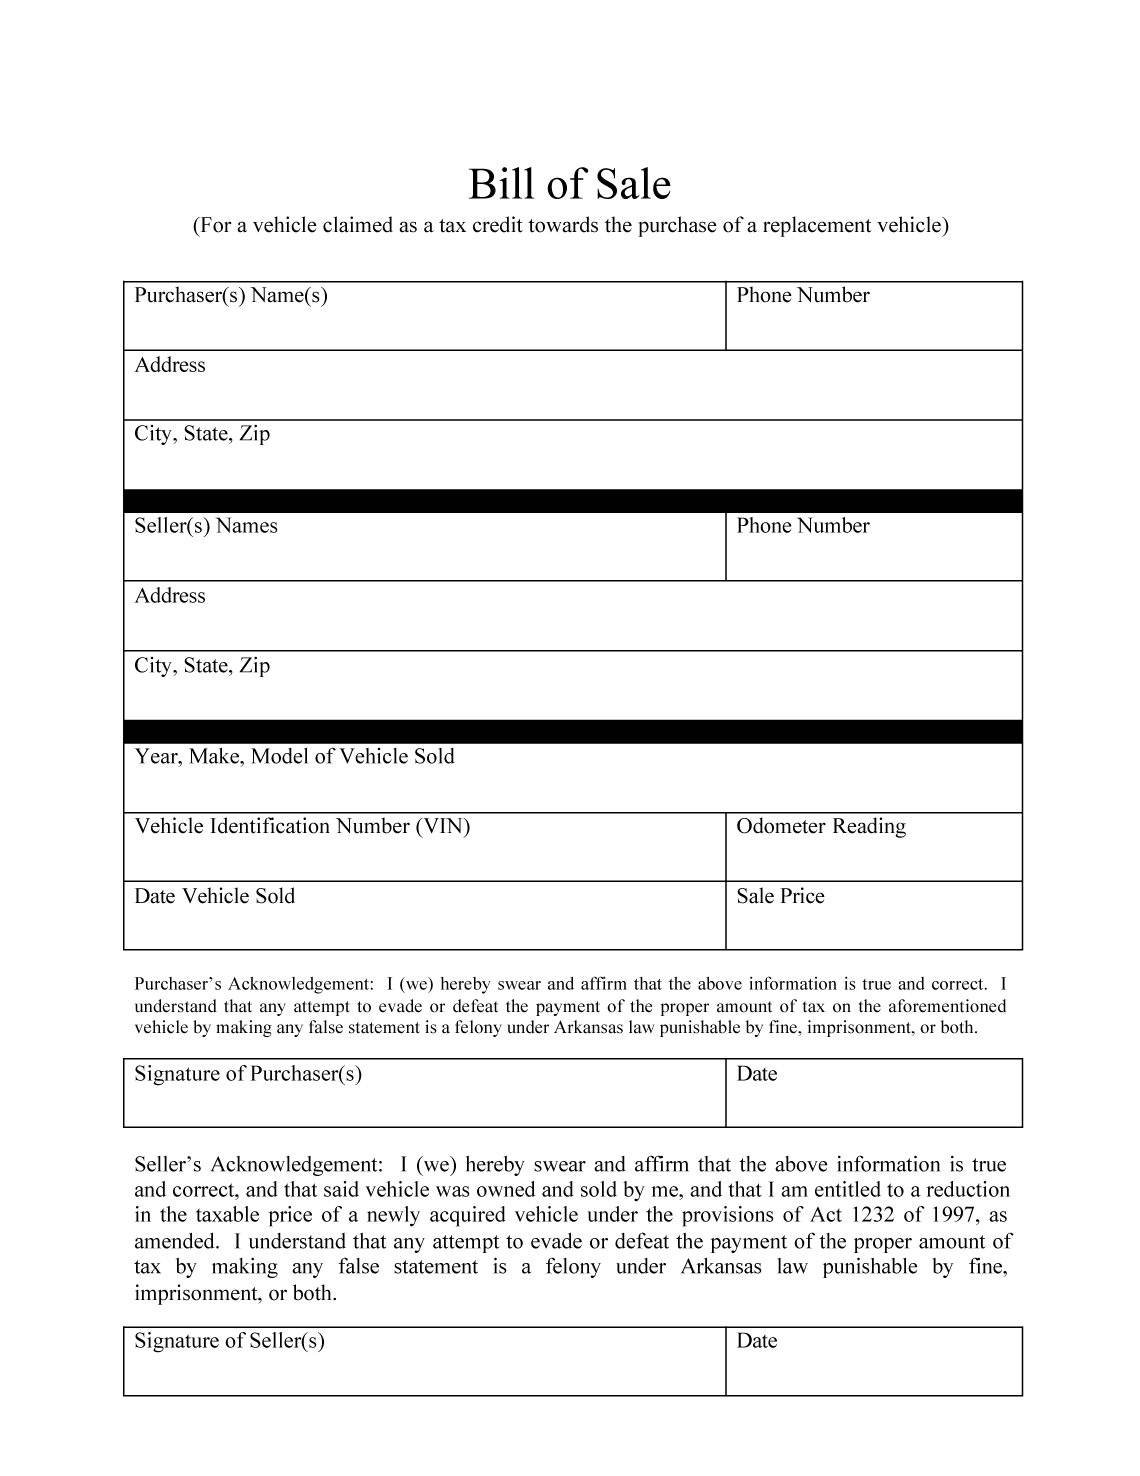 46-fee-printable-bill-of-sale-templates-car-boat-gun-vehicle-free-template-downloads